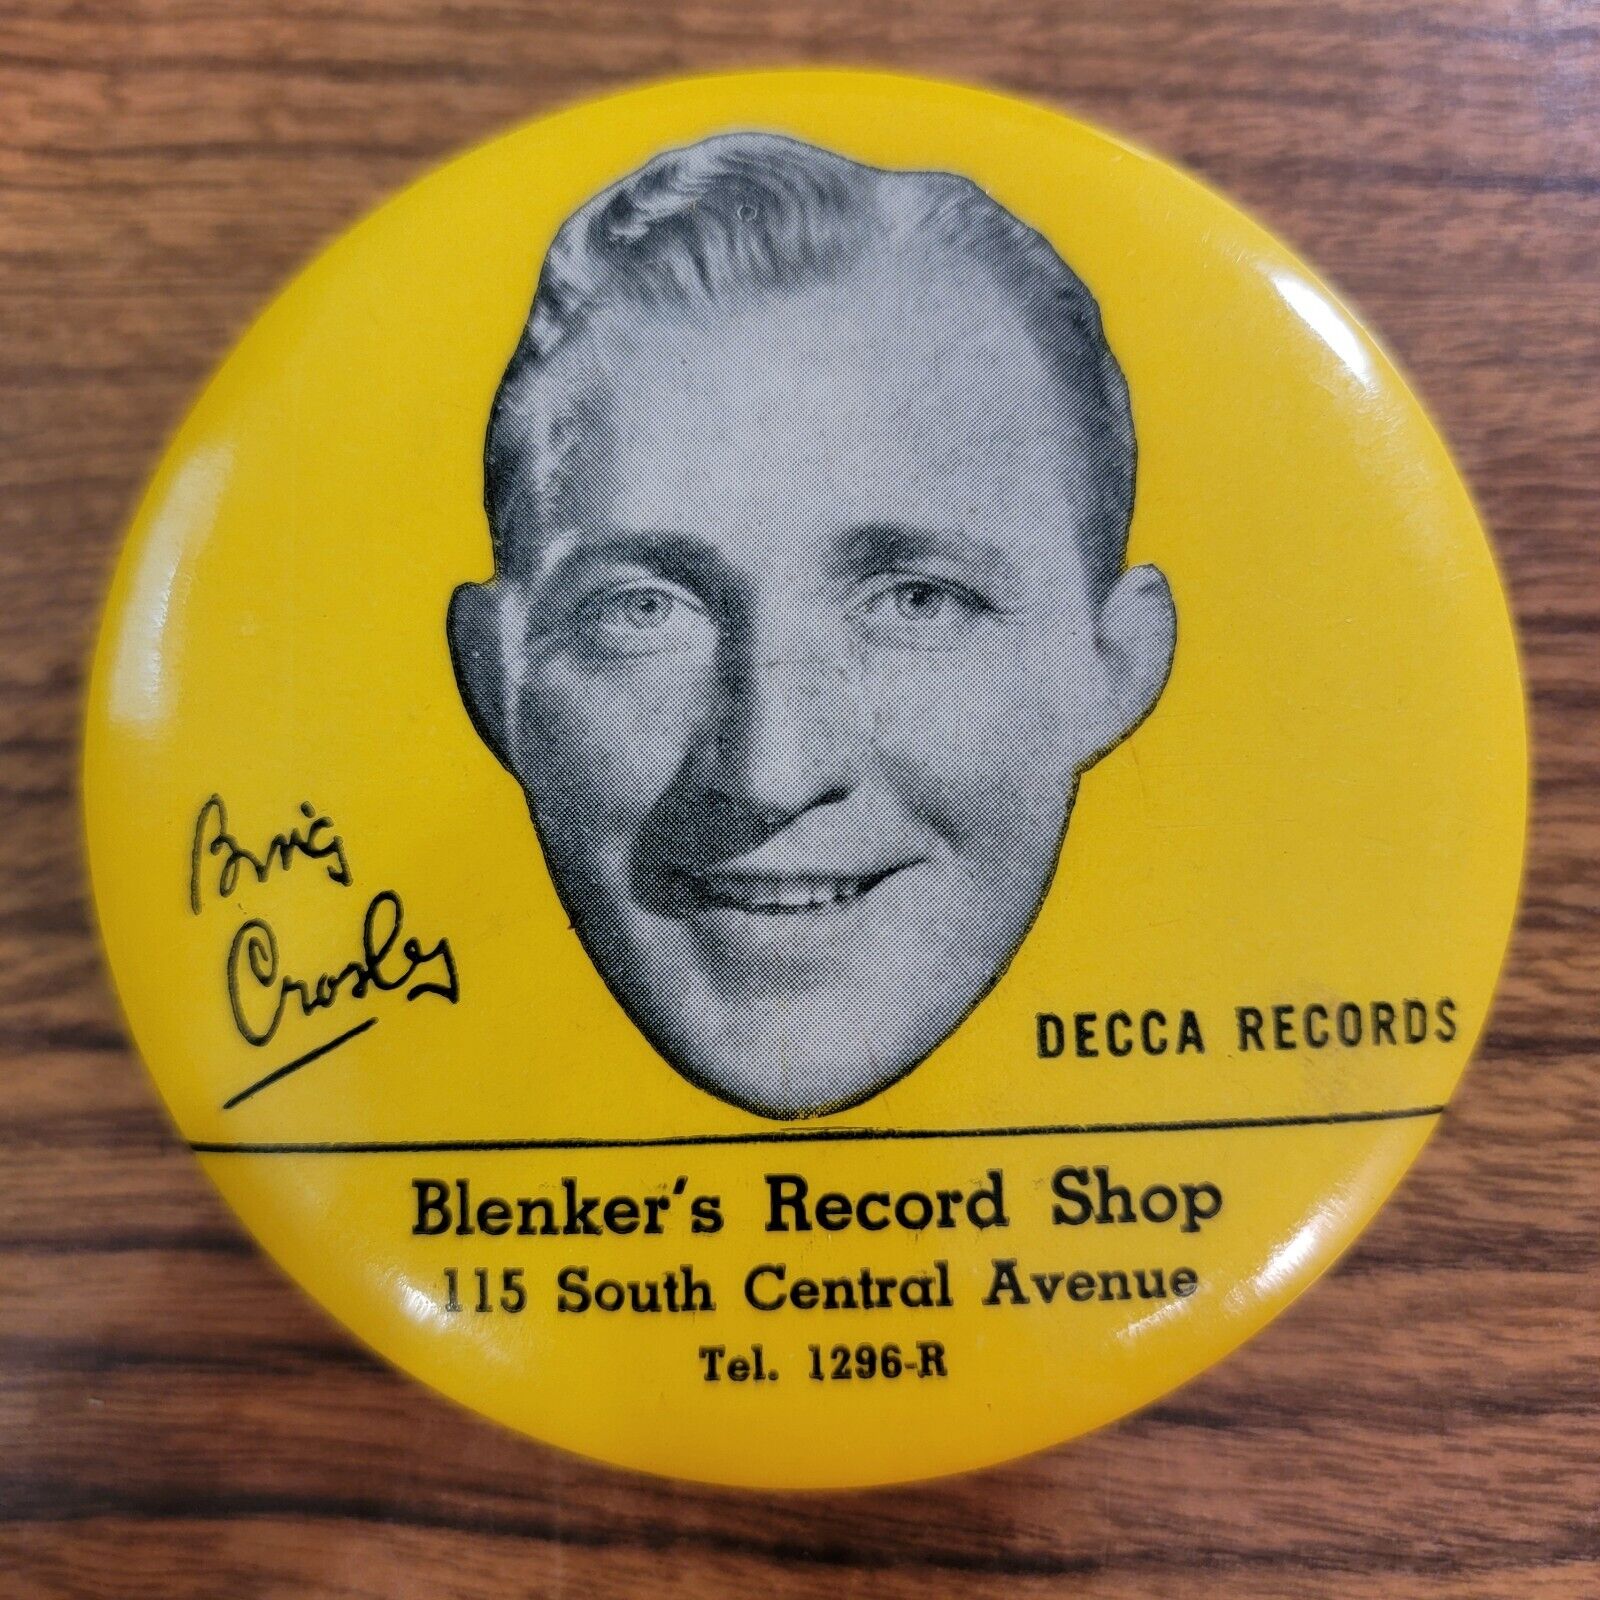 Vintage Bing Crosby Decca Records Vinyl Records Cleaner, South Central Avenue